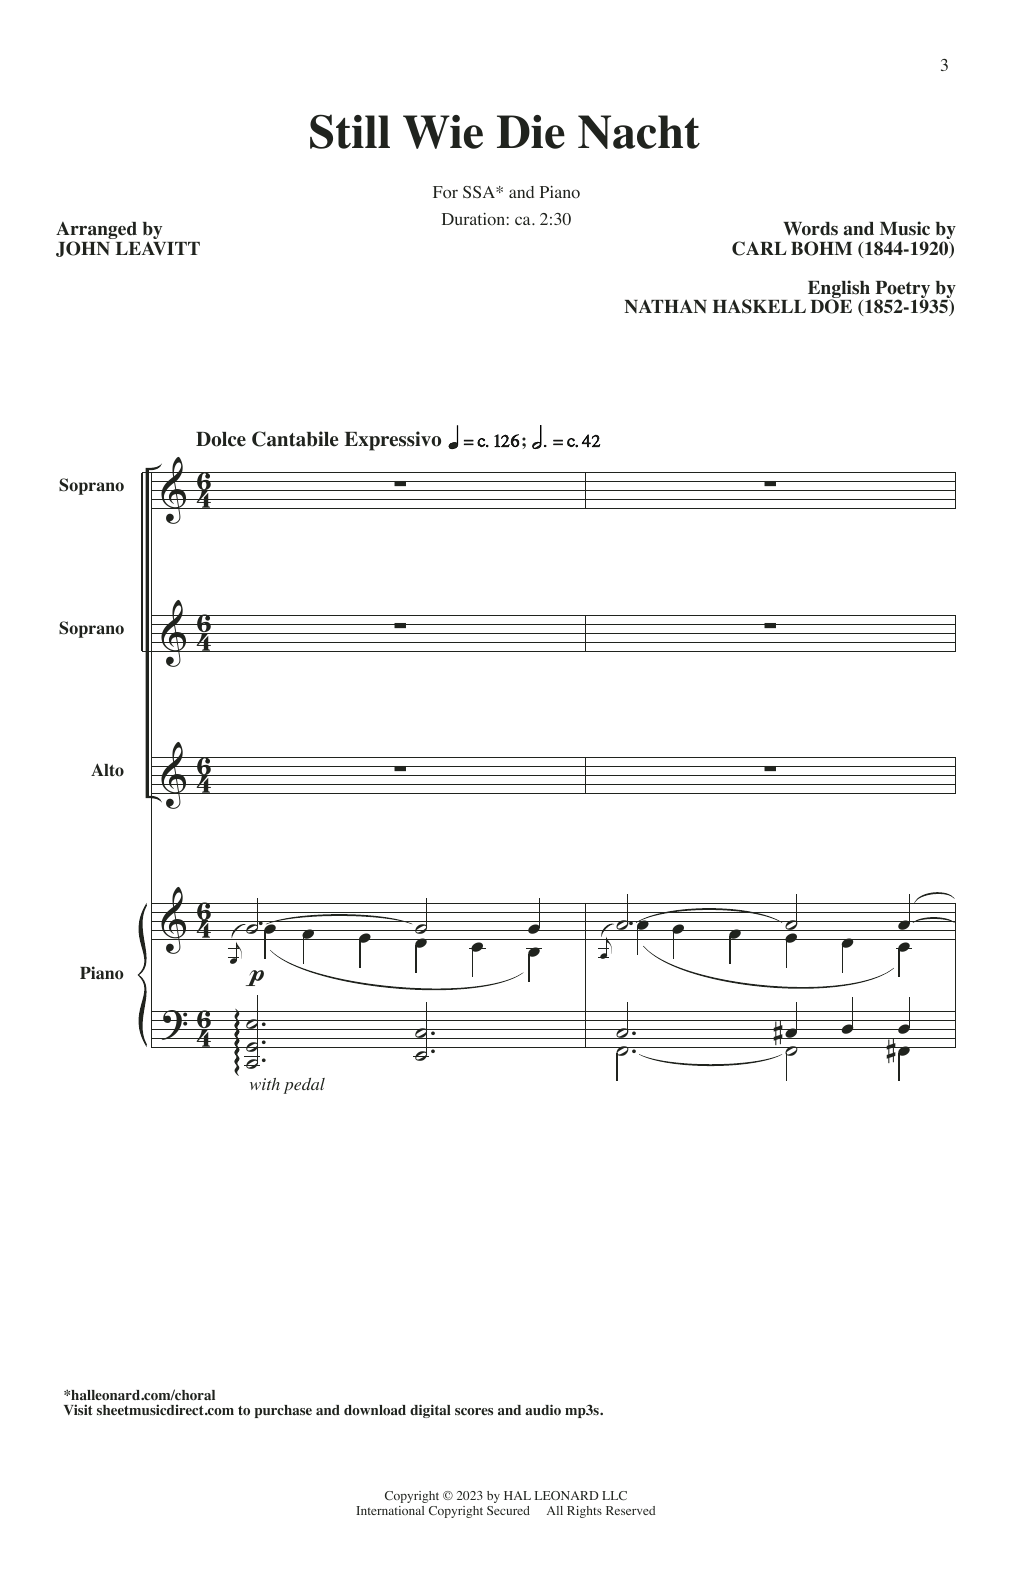 Download Bohm, Carl Still Wie Die Nacht (Calm As The Night) (arr. John Leavitt) Sheet Music and learn how to play SSA Choir PDF digital score in minutes